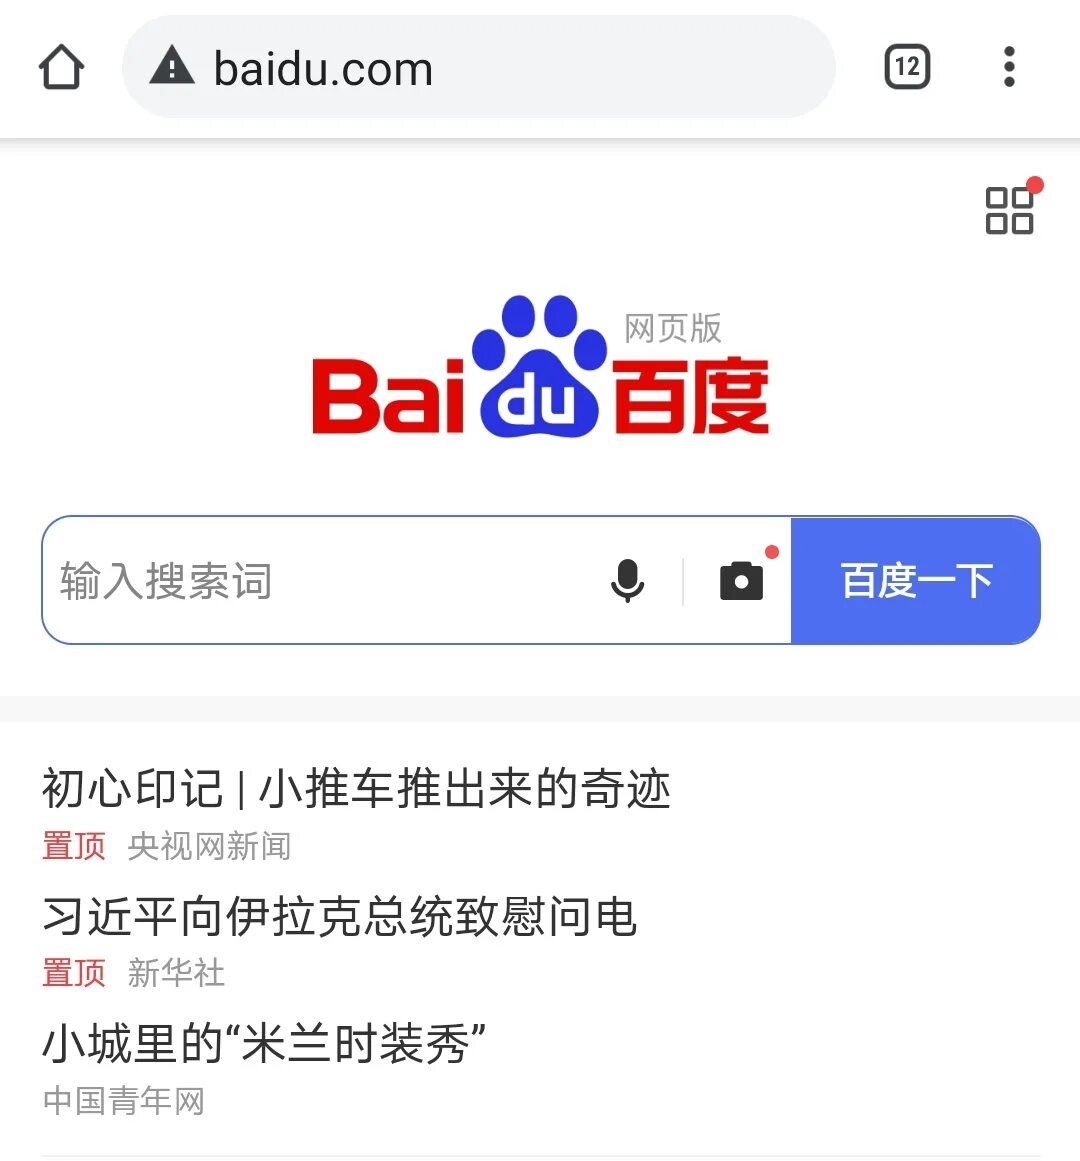 Baidu apk. Baidu Поисковик. Байду китайский Поисковик. Китайский браузер baidu. Китайский сайт baidu .com.